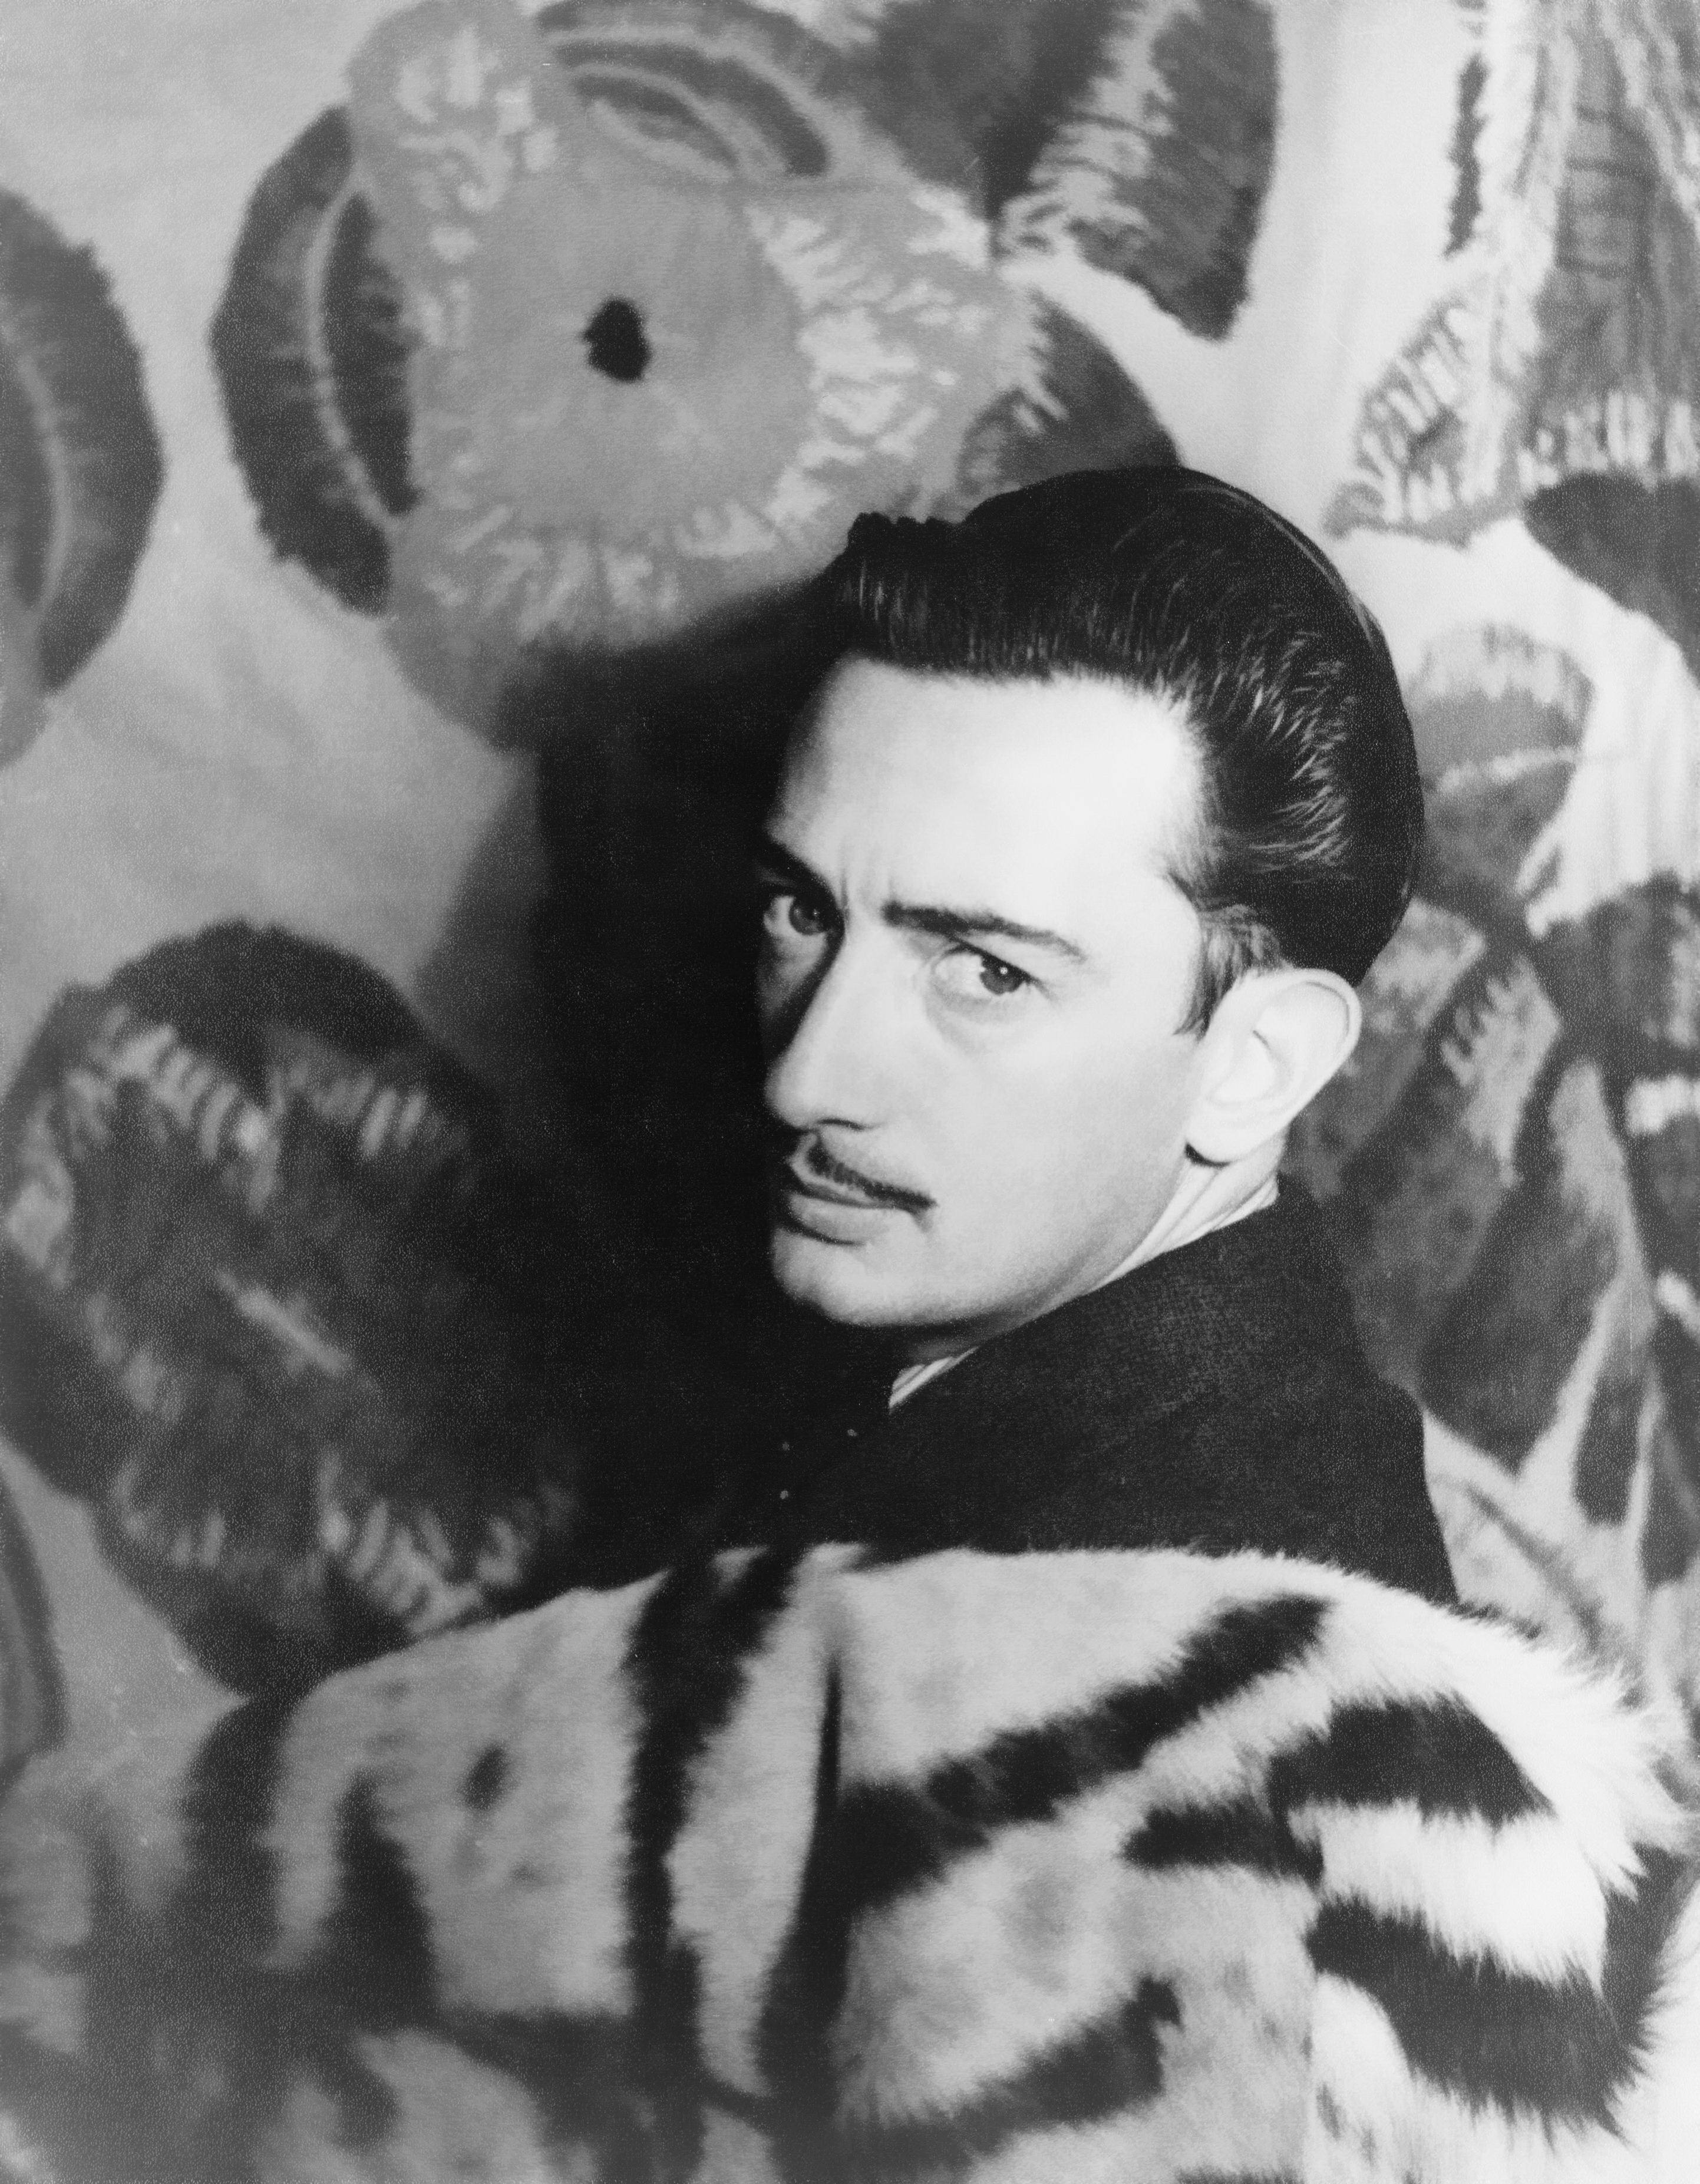 Salvador Dalí - 11. Mai 1904 - 23. Januar 1989